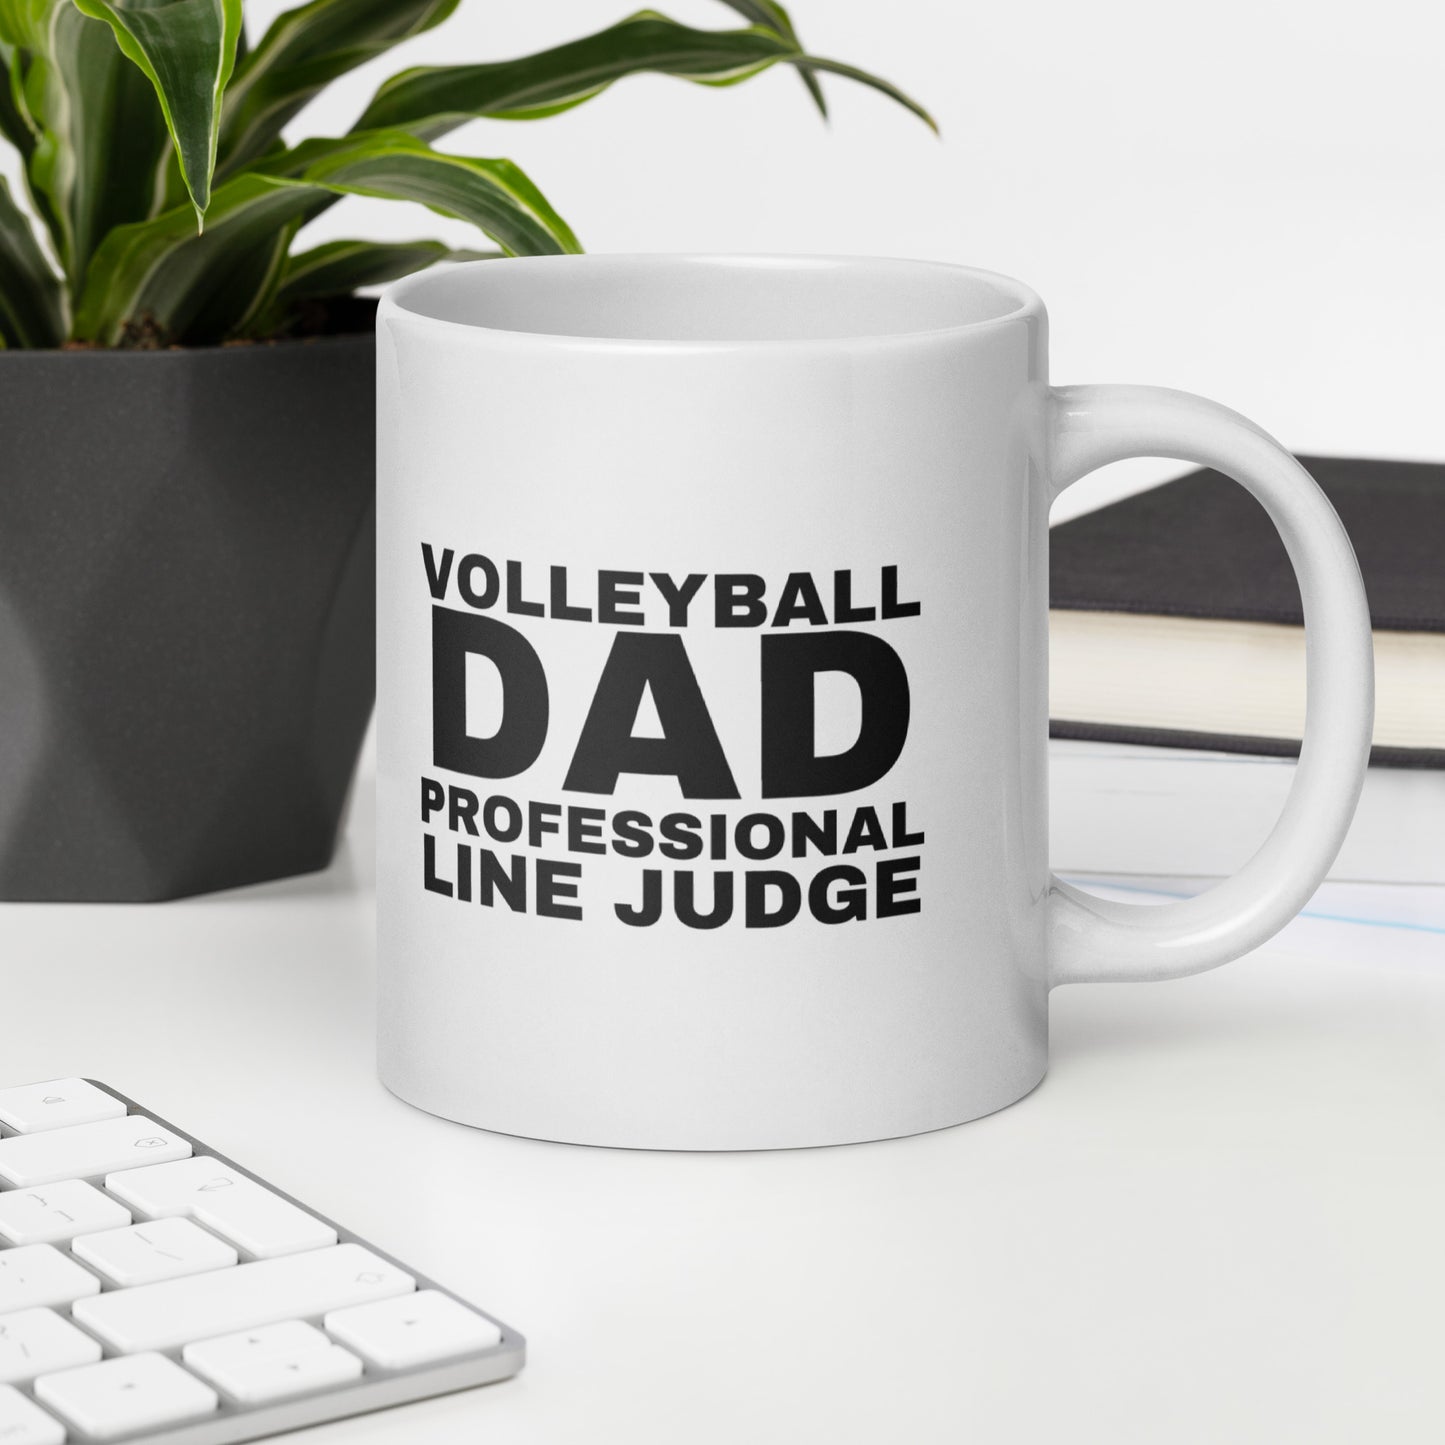 Volleyball Dad - White glossy mug